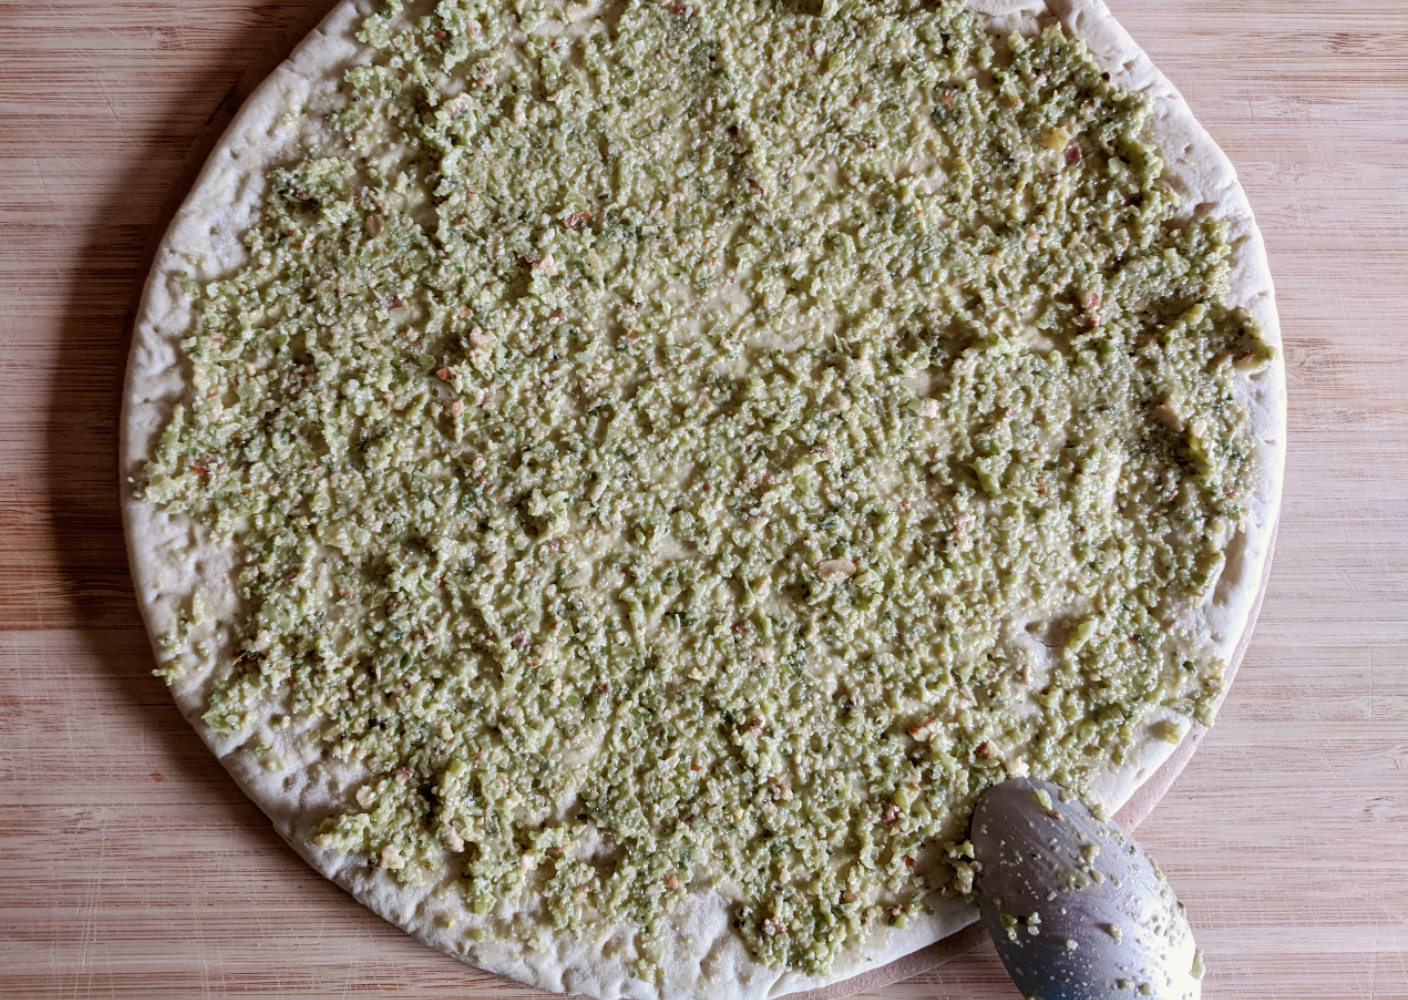 Kale stem oesto spread on a pizza base